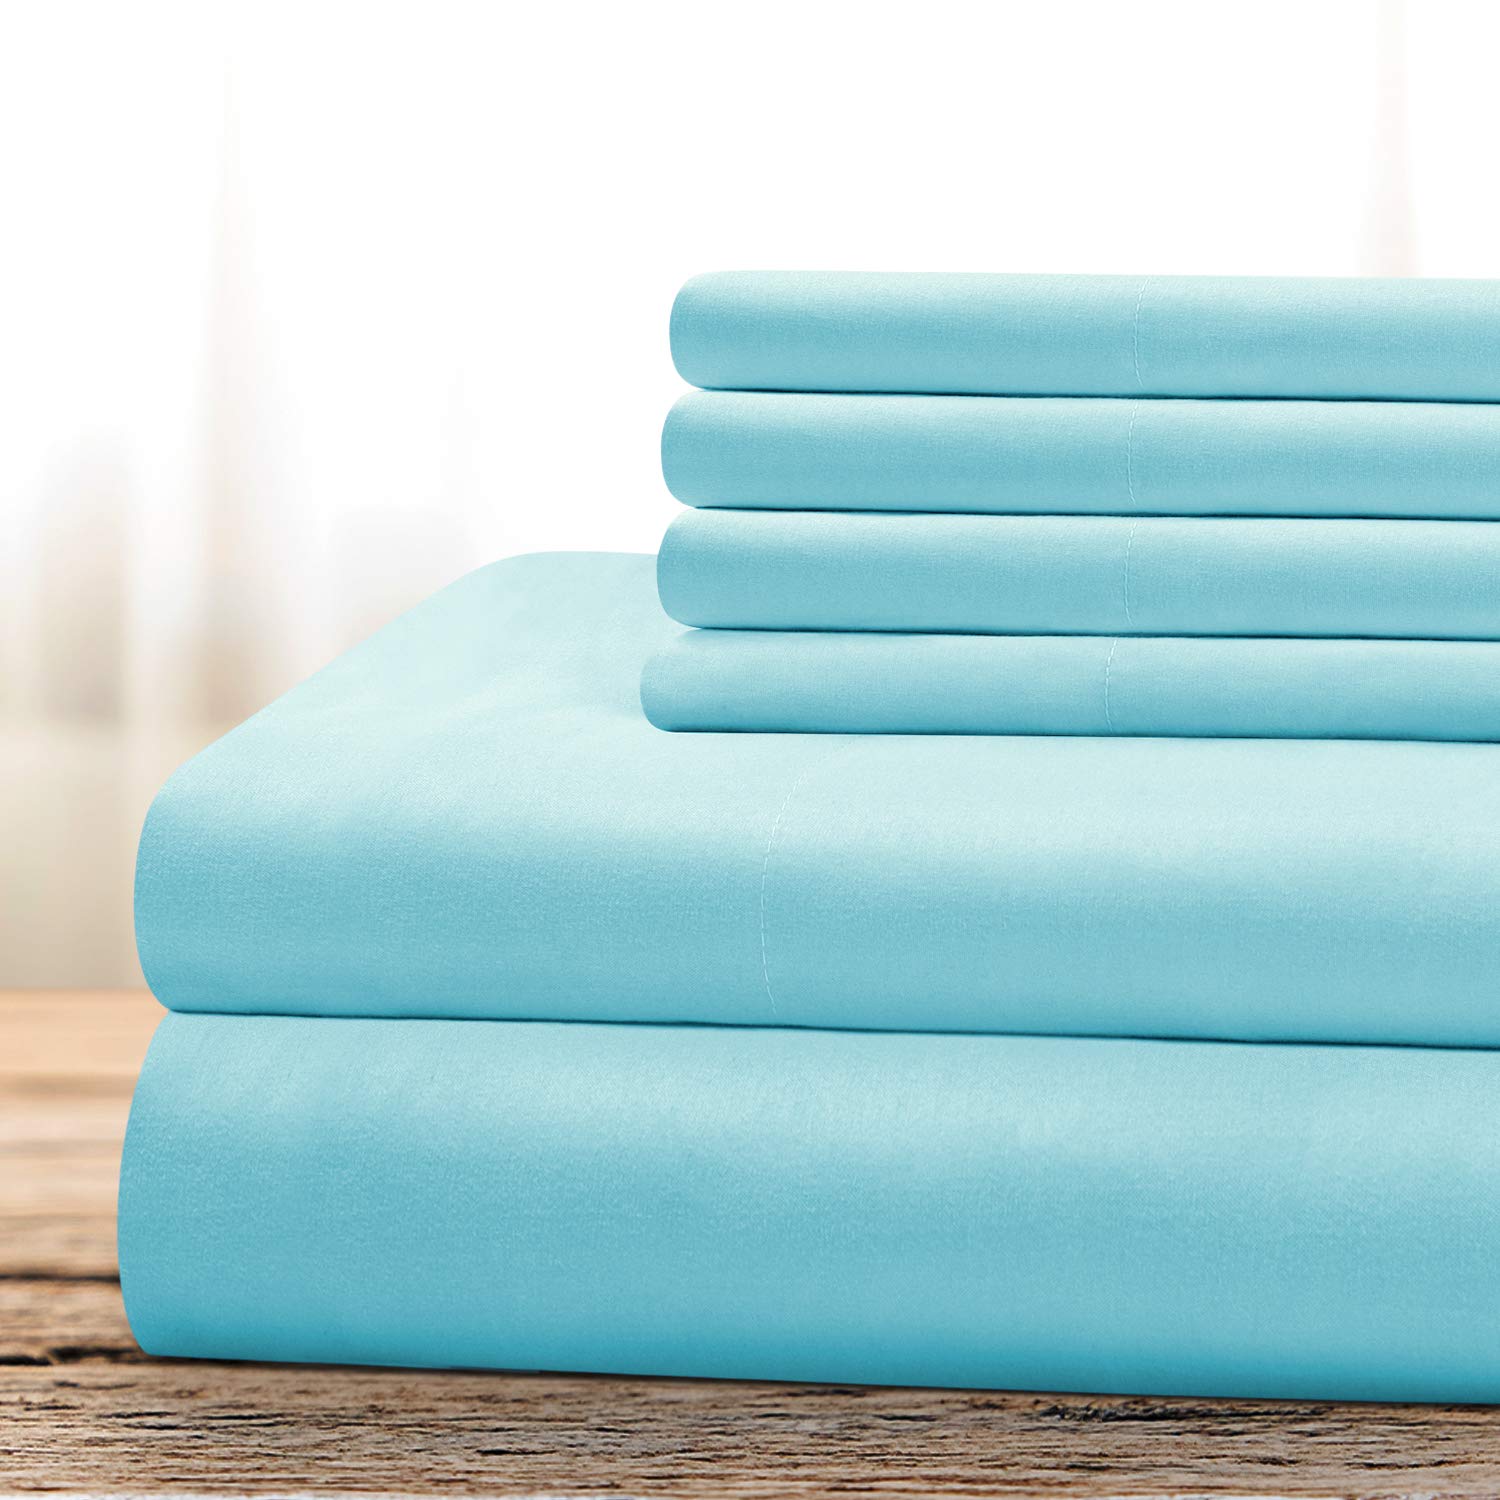 BYSURE Hotel Luxury Bed Sheets Set 6 Piece(Queen, Aqua Blue) - Super Soft 1800 Thread Count 100% Microfiber Sheets with Deep Poc